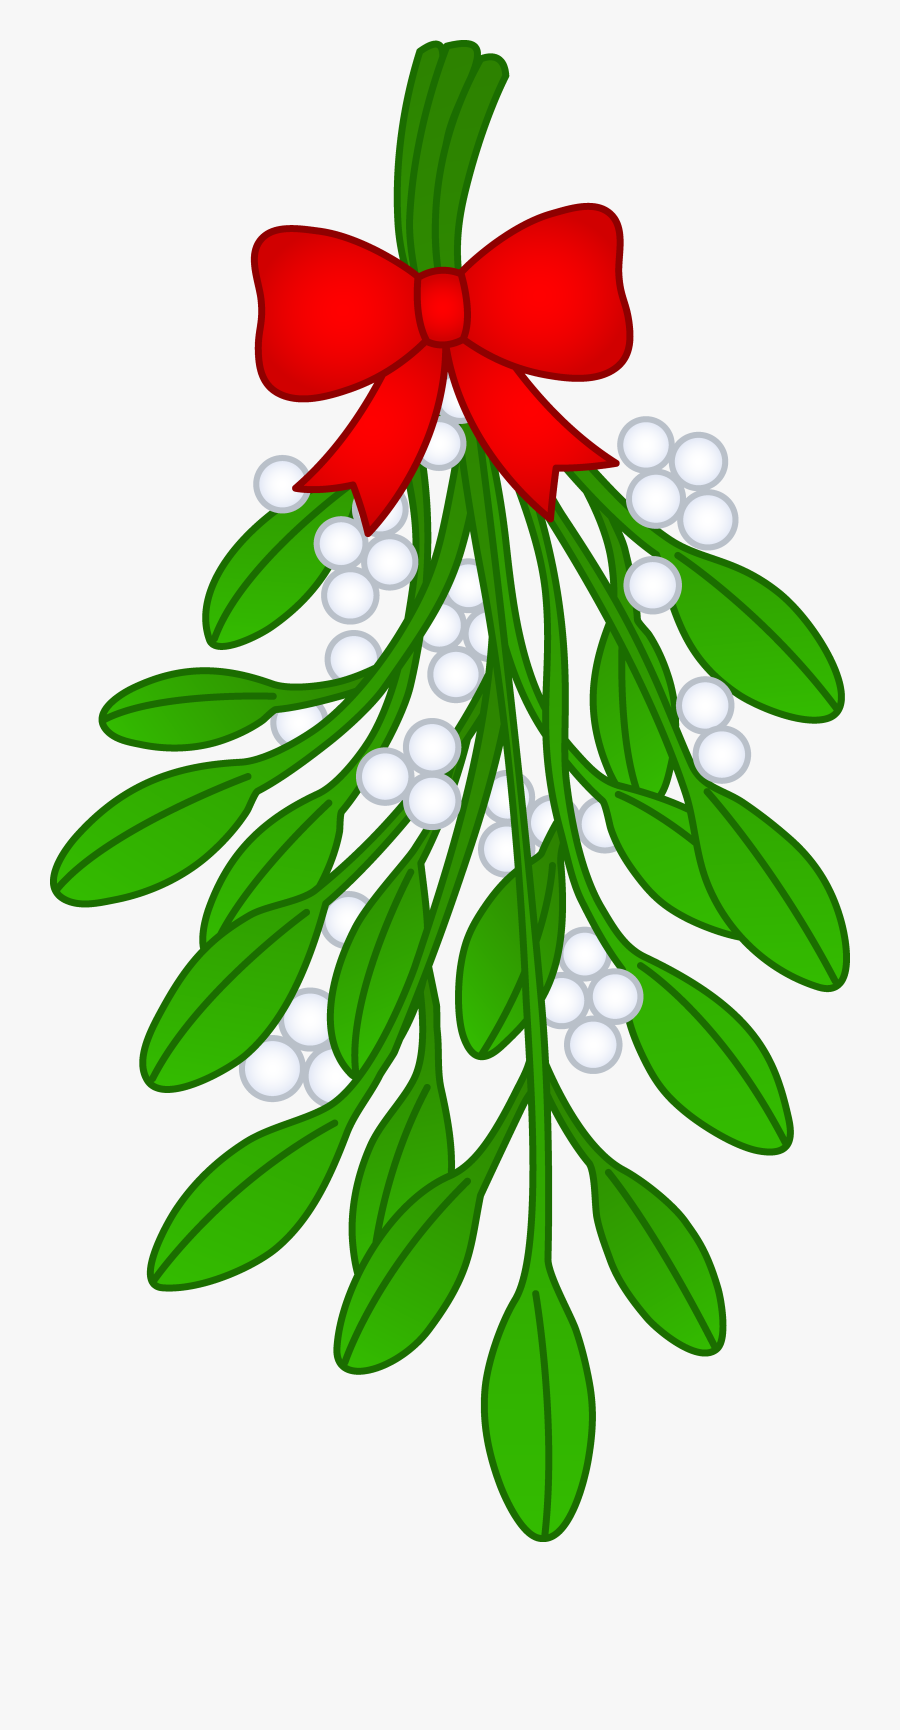 Clipart Mistletoe - Christmas Mistletoe Clipart, Transparent Clipart